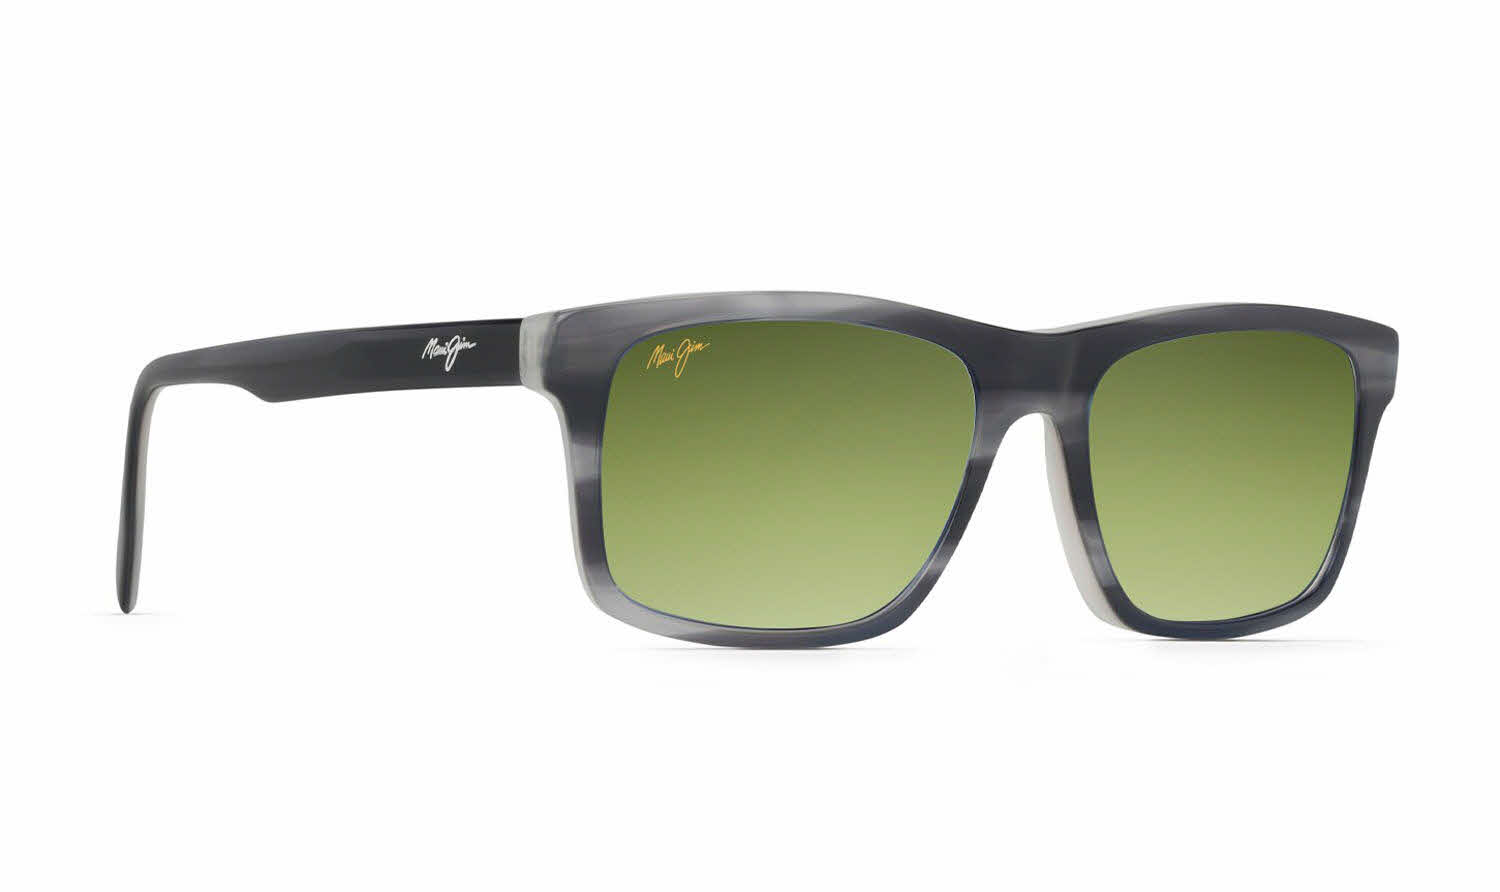 Maui Jim Waipio Valley-812 Prescription Sunglasses